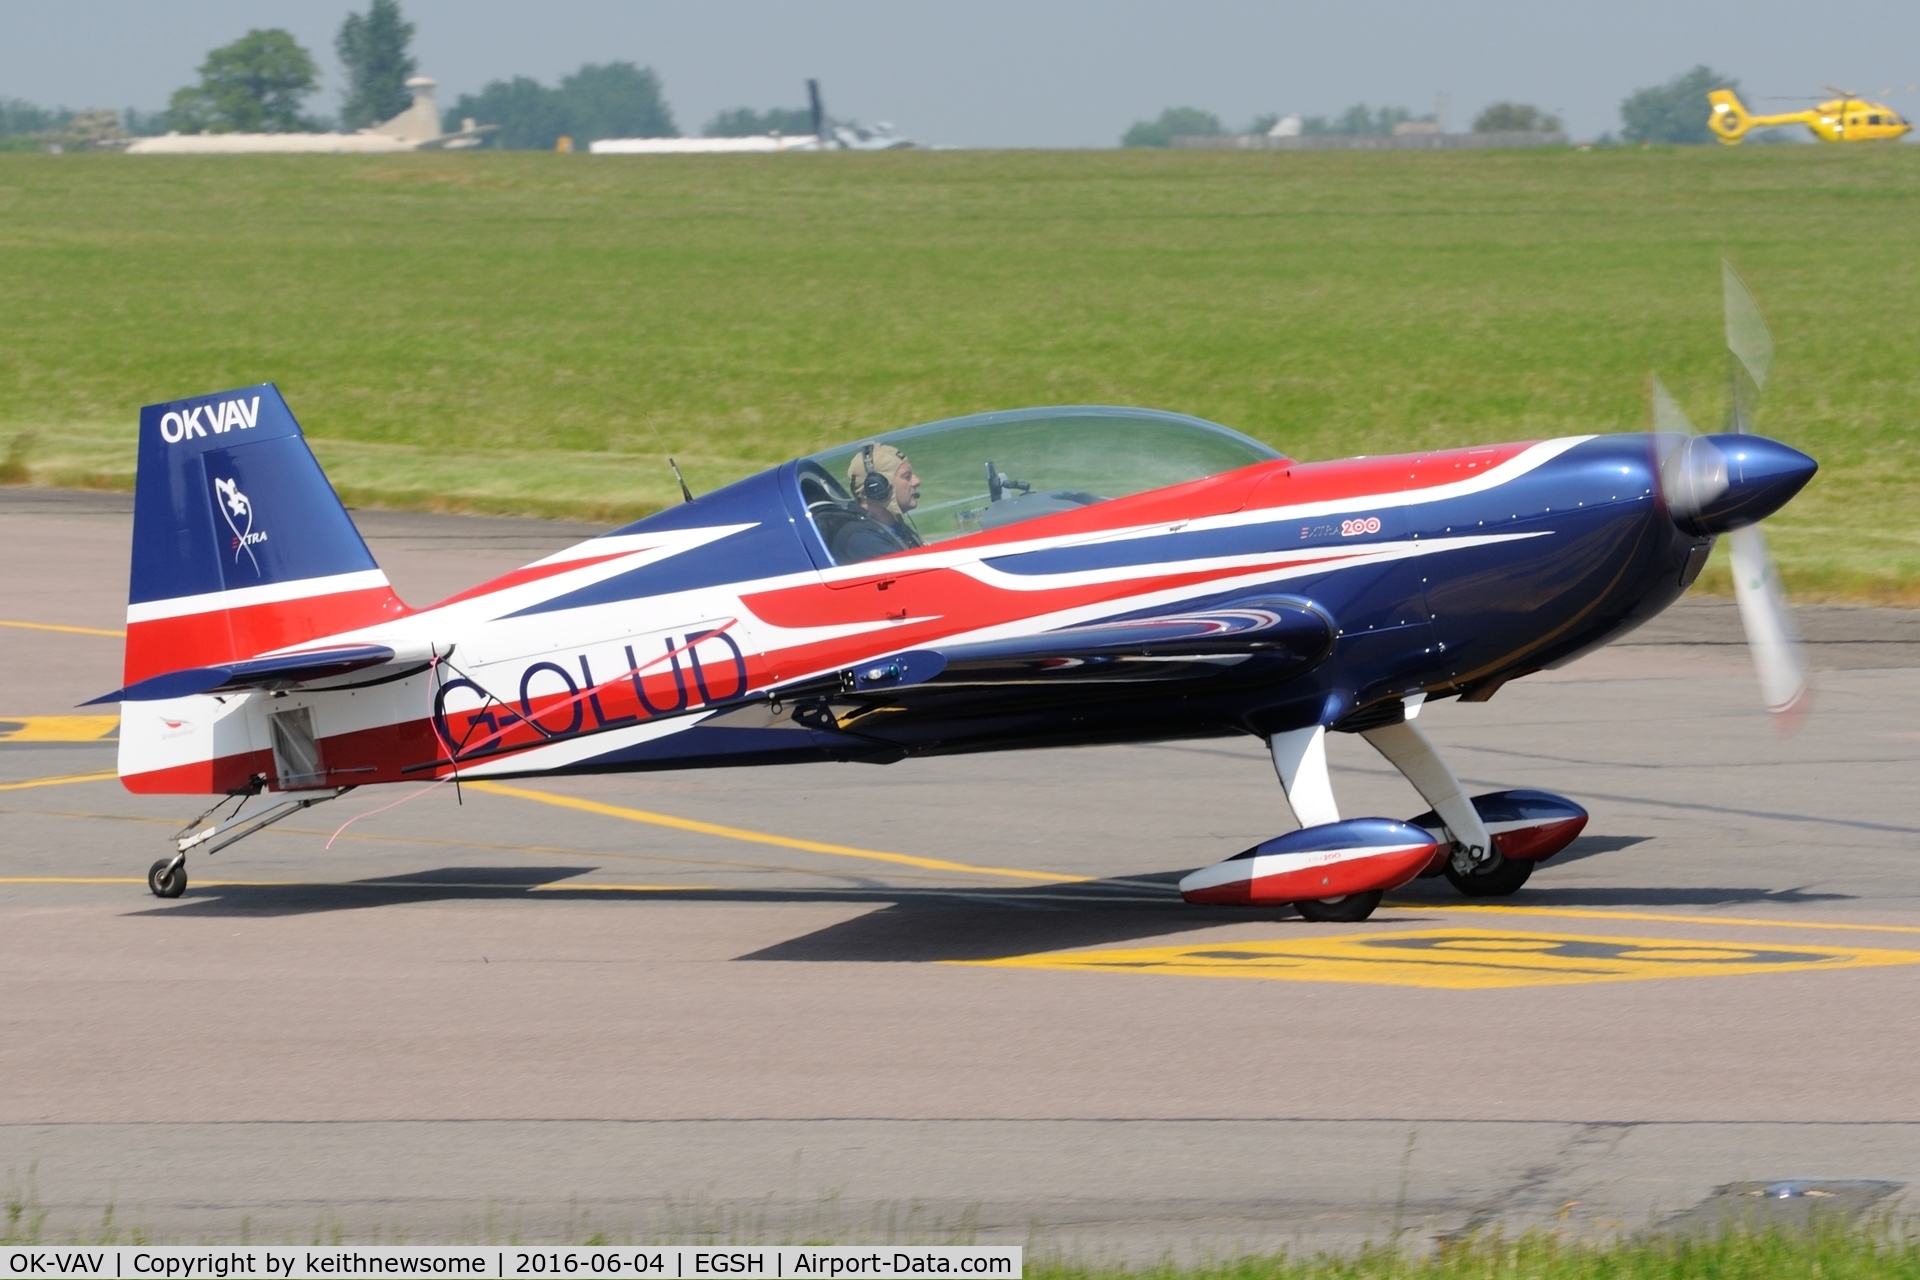 OK-VAV, 2012 Extra EA-300 C/N 1044, Now showing unused British registration G-OLUD.